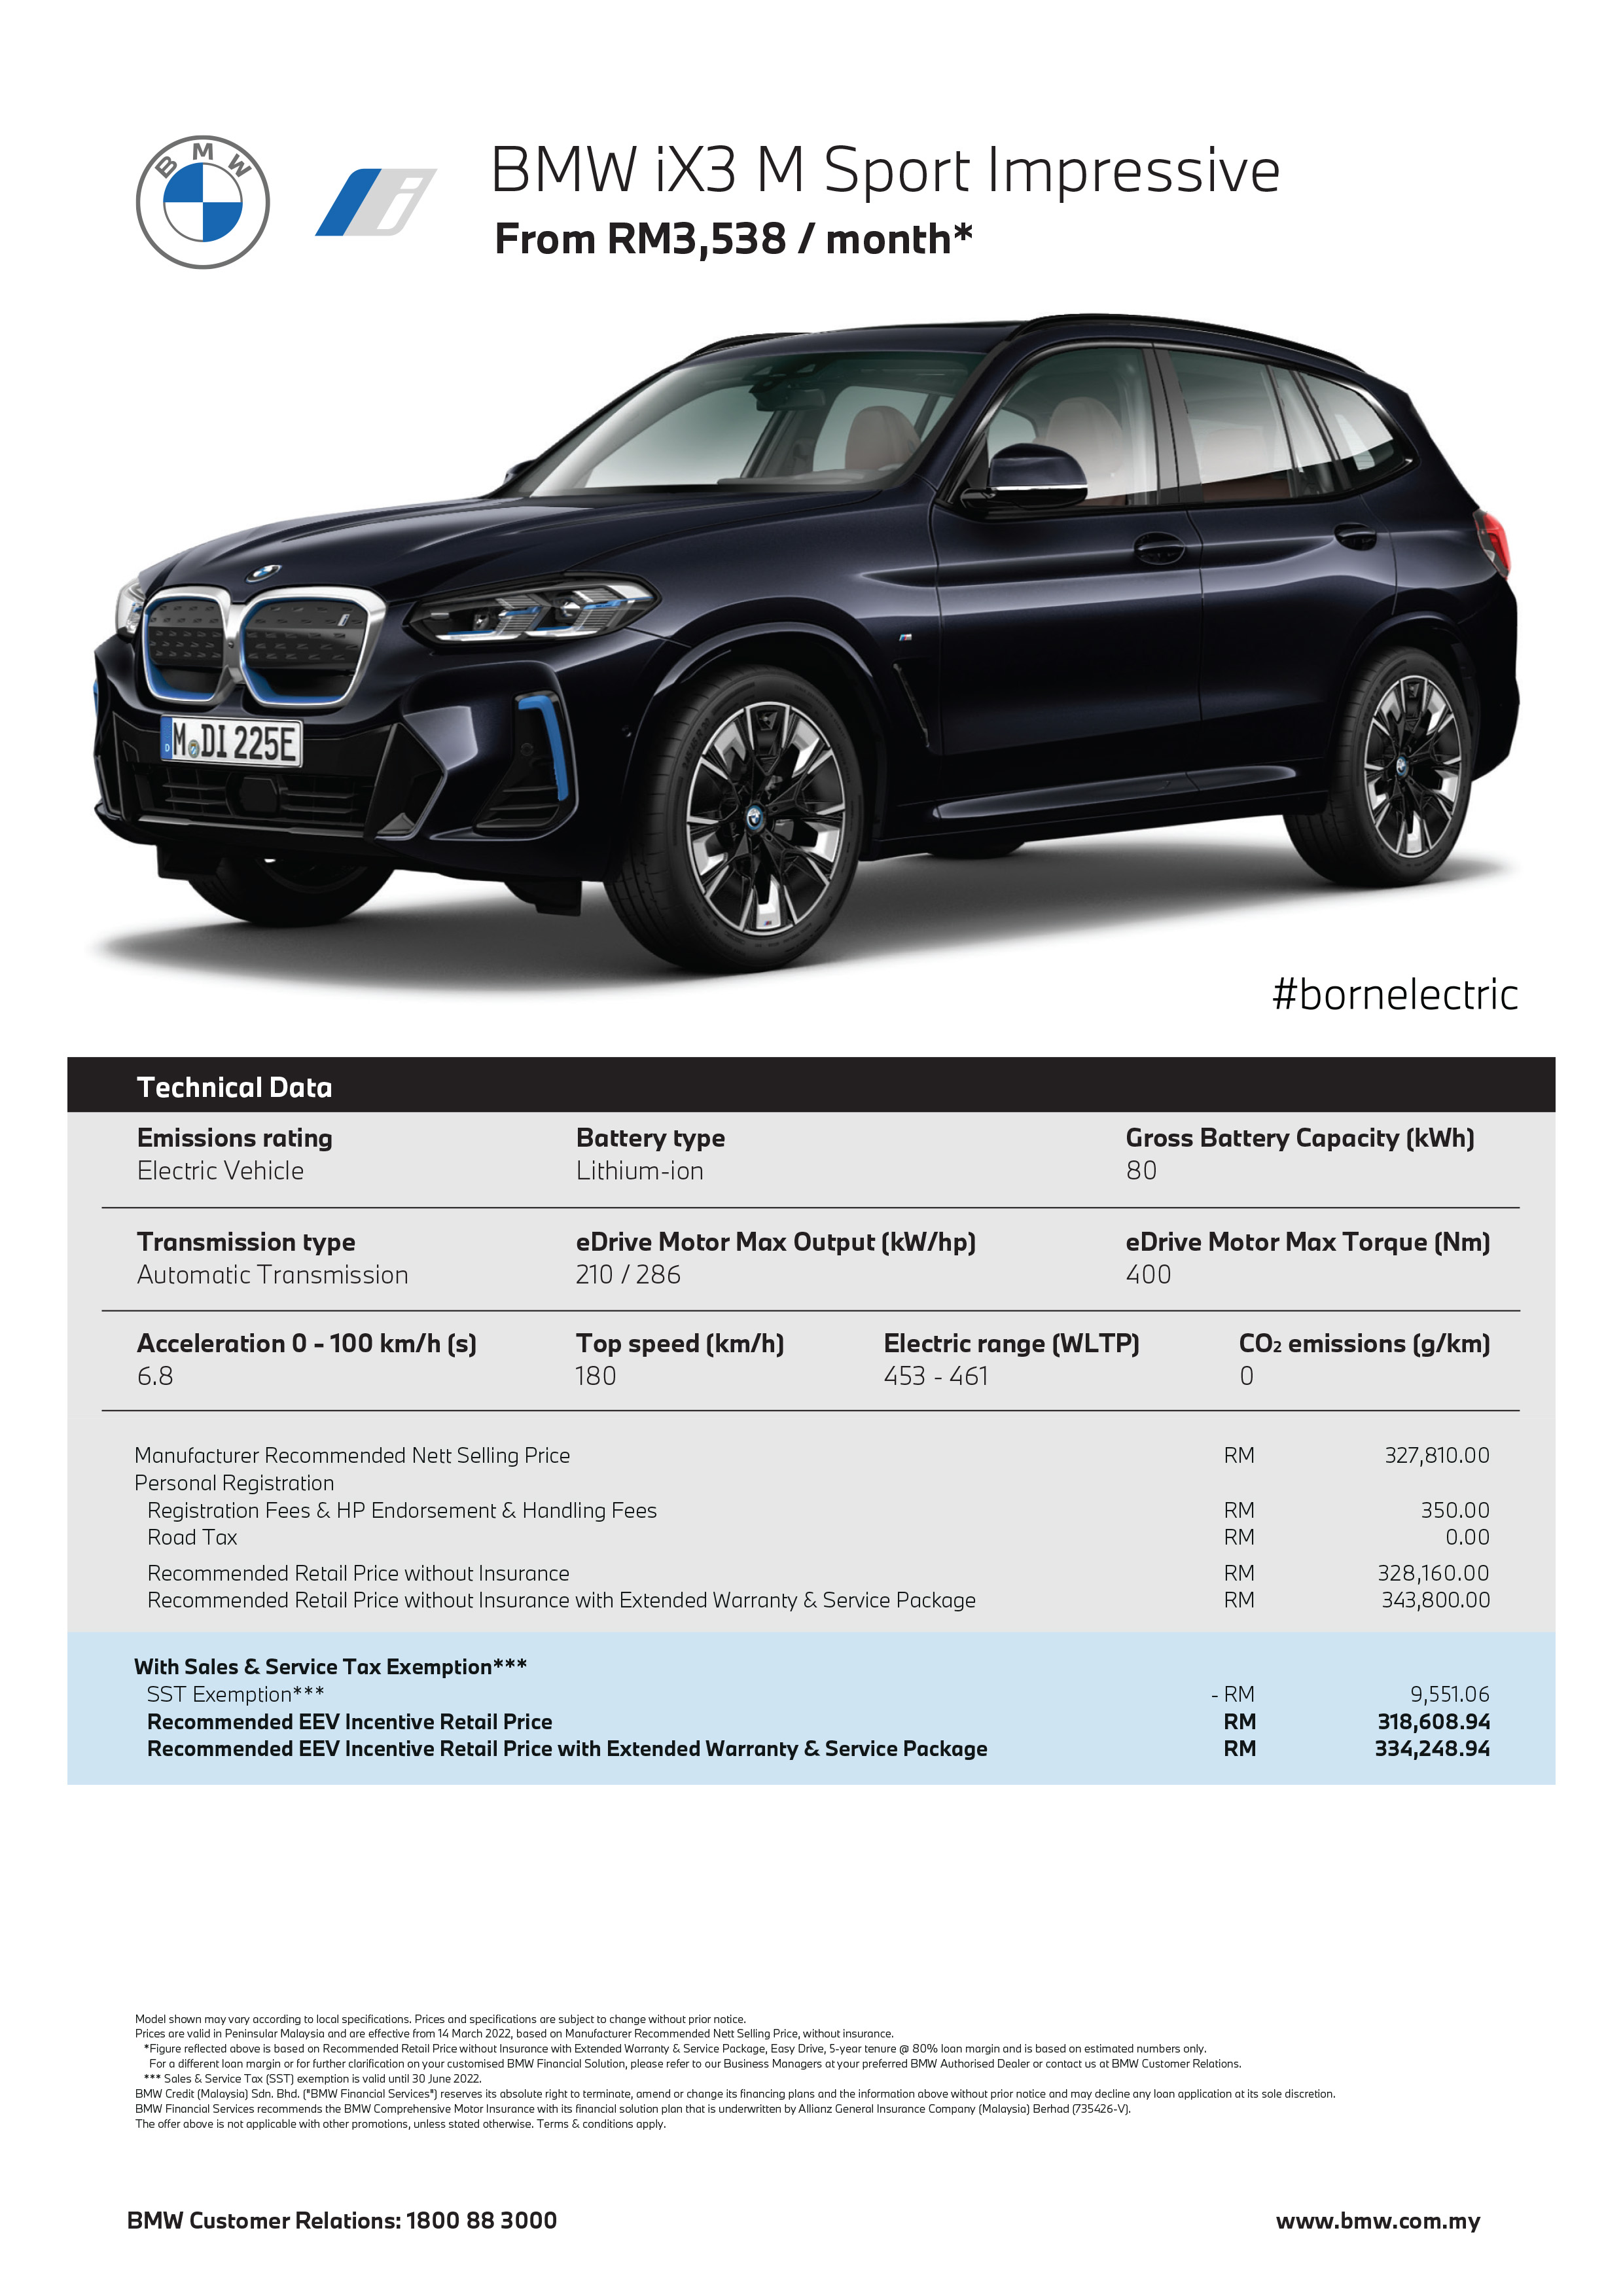 BMW - iX3 M Sport Impression - 250122 - PM